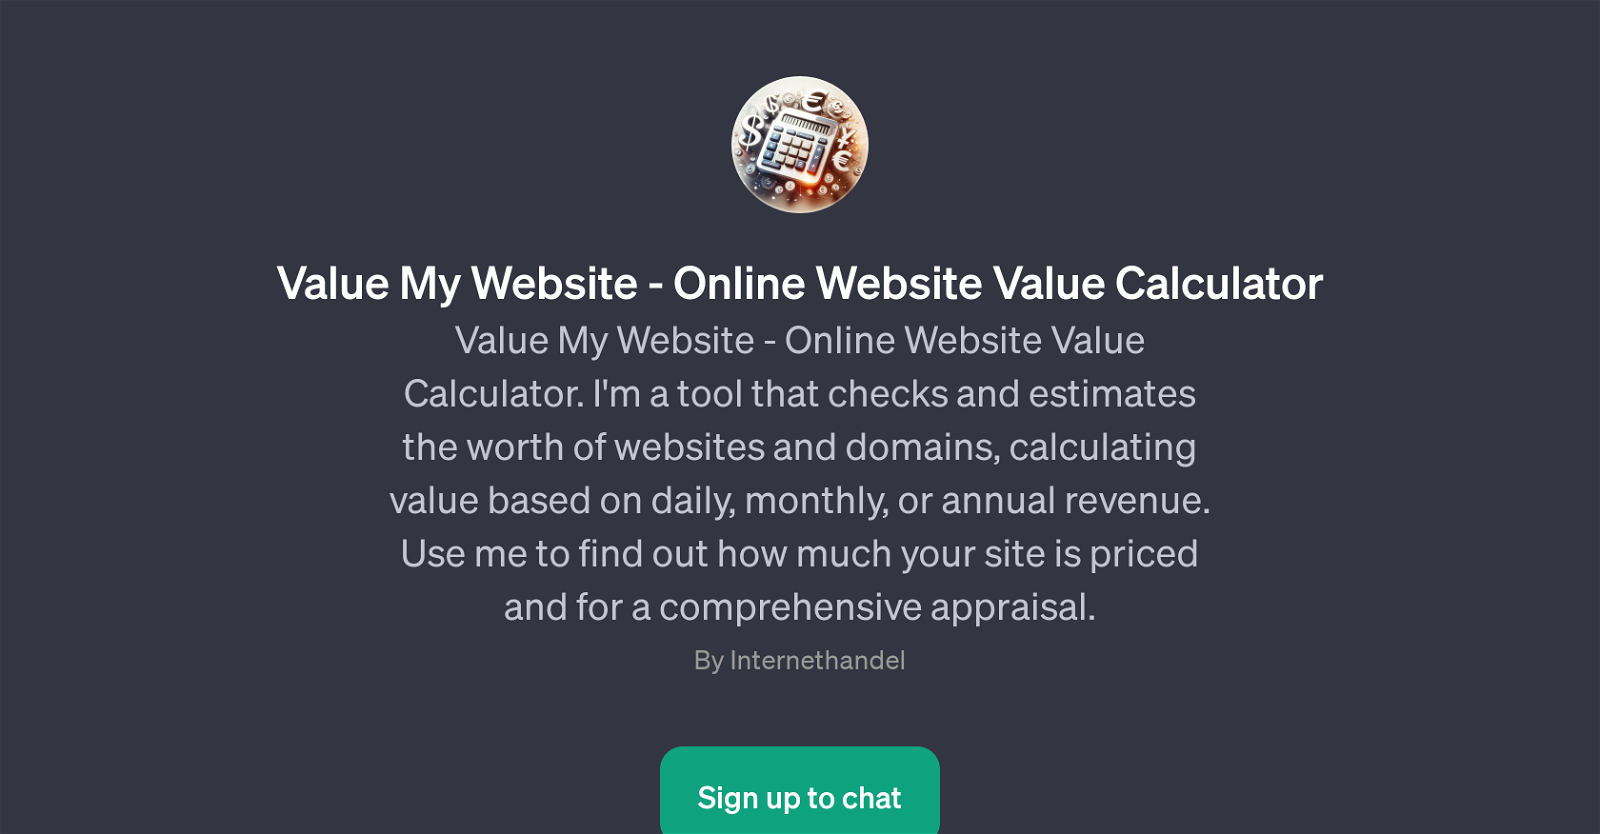 Value My Website - Online Website Value Calculator website